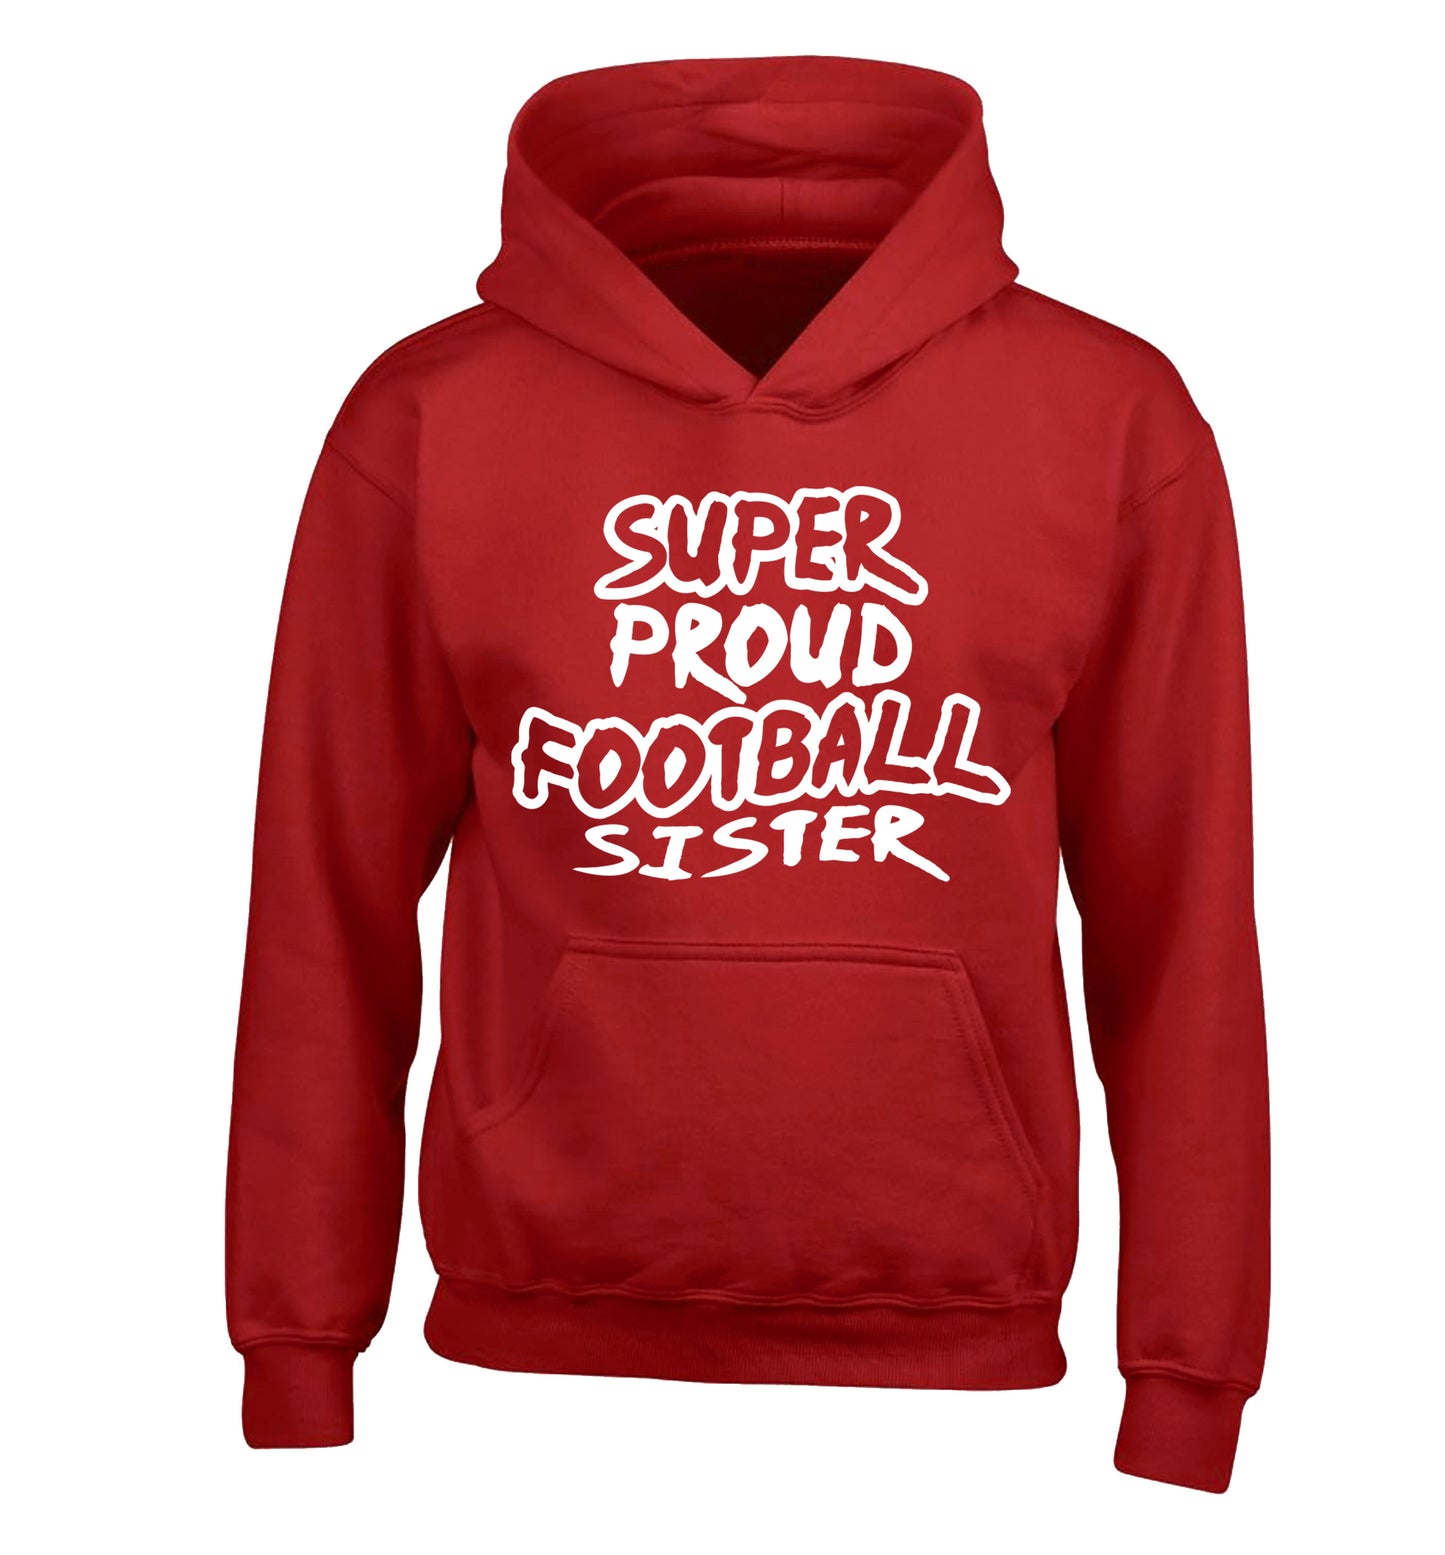 Super proud football sister children's red hoodie 12-14 Years